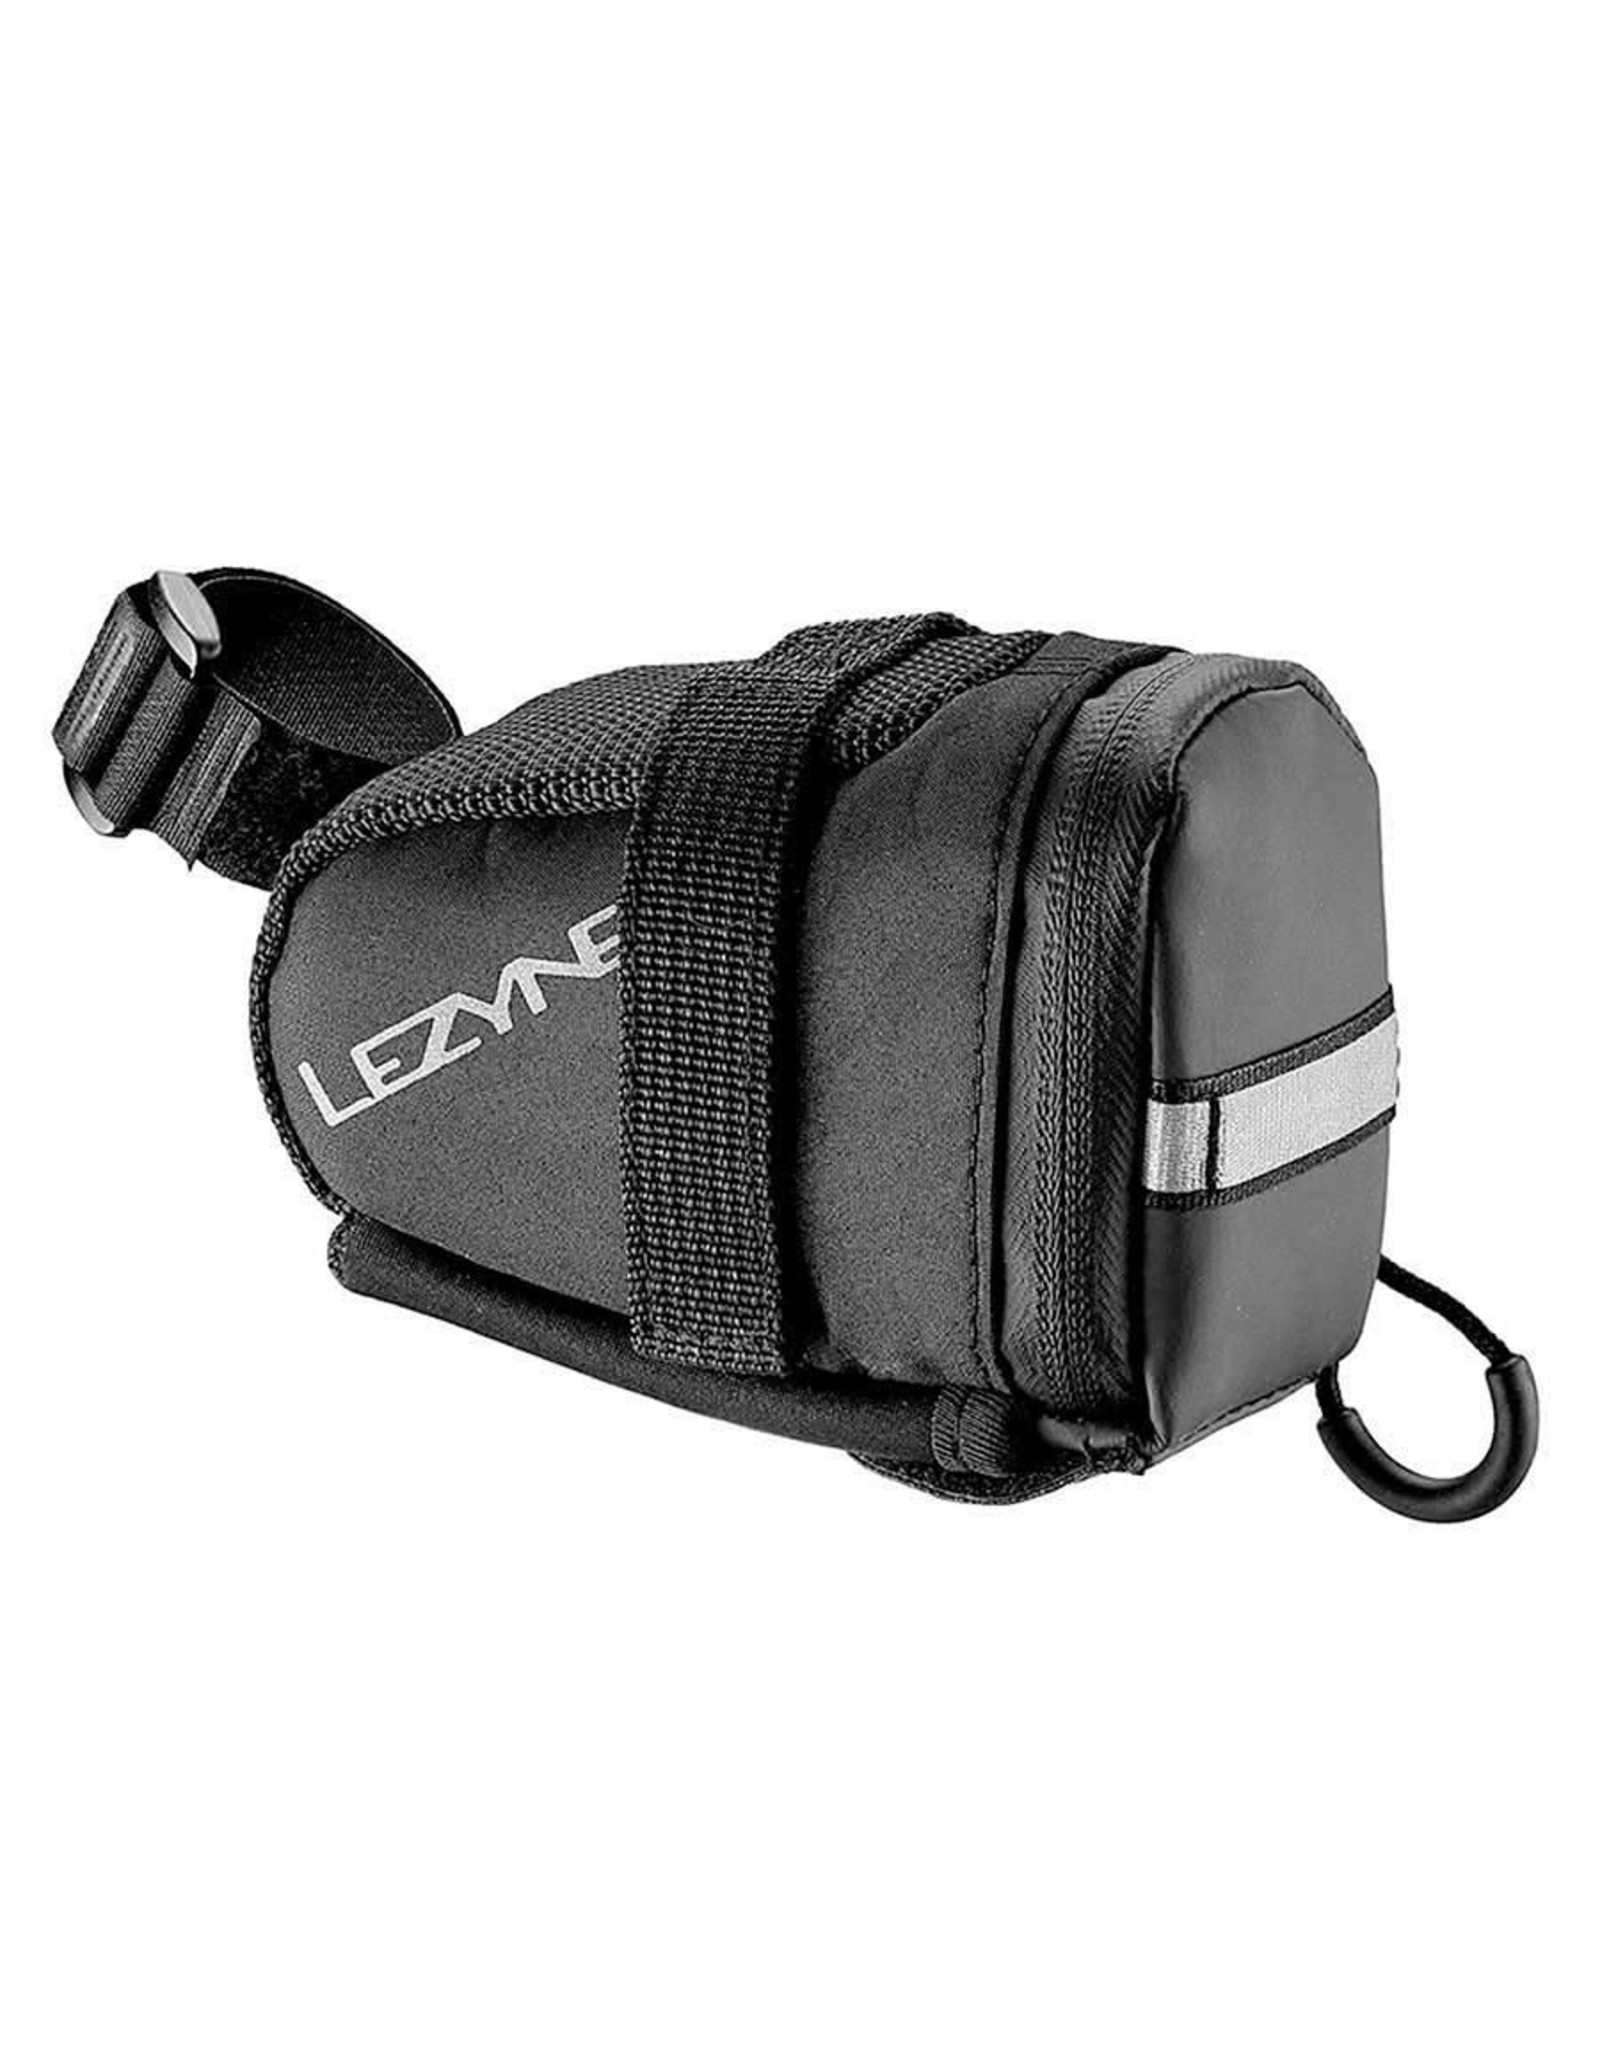 Lezyne Lezyne, S- Caddy, Seat Bag, 0.4L, Black/Black